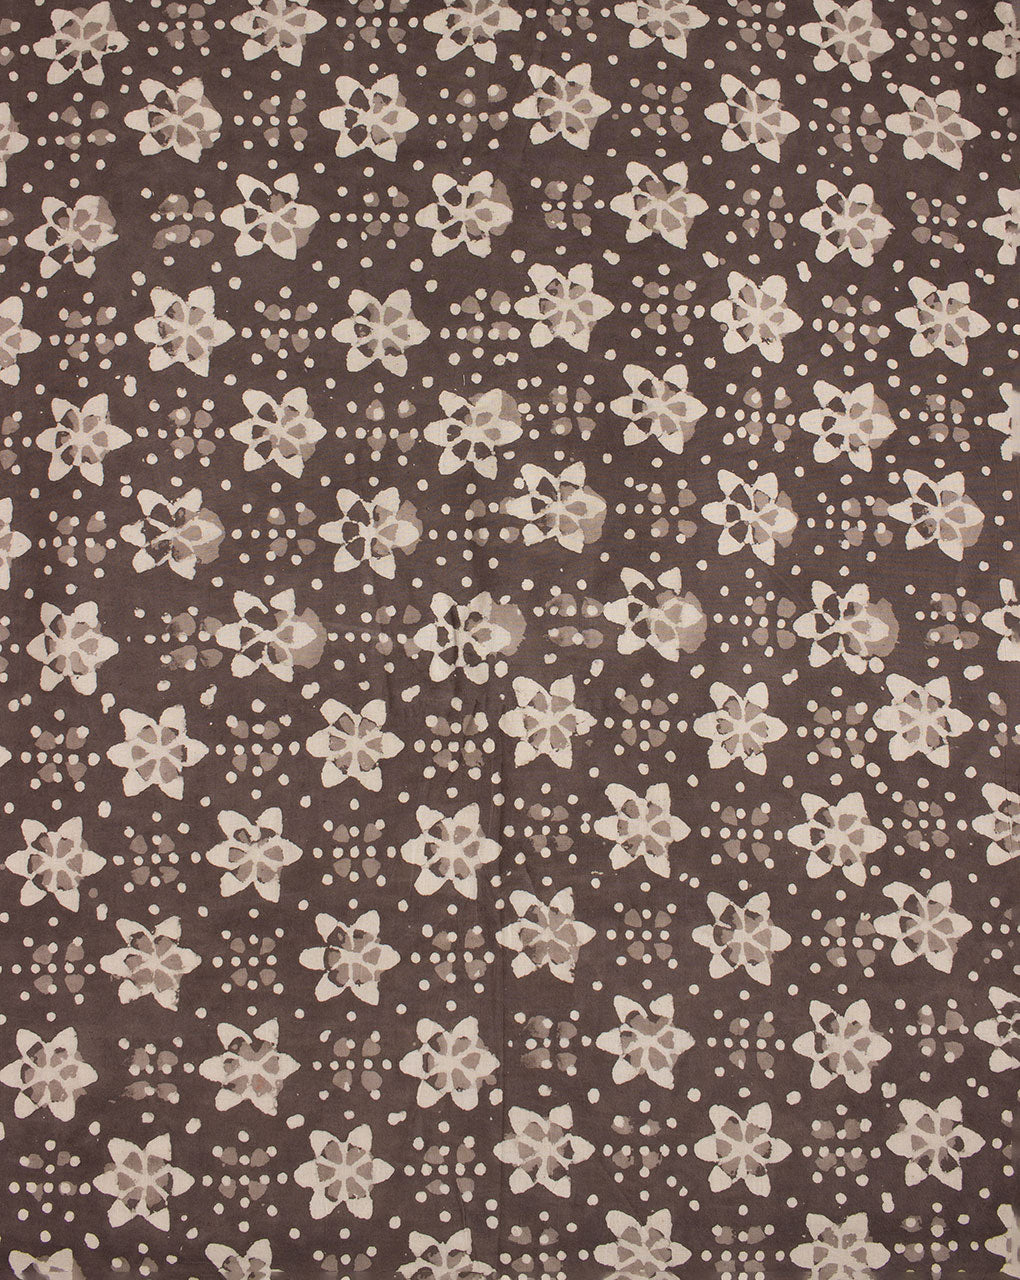 Kashish Hand Block Cotton Fabric - Fabriclore.com